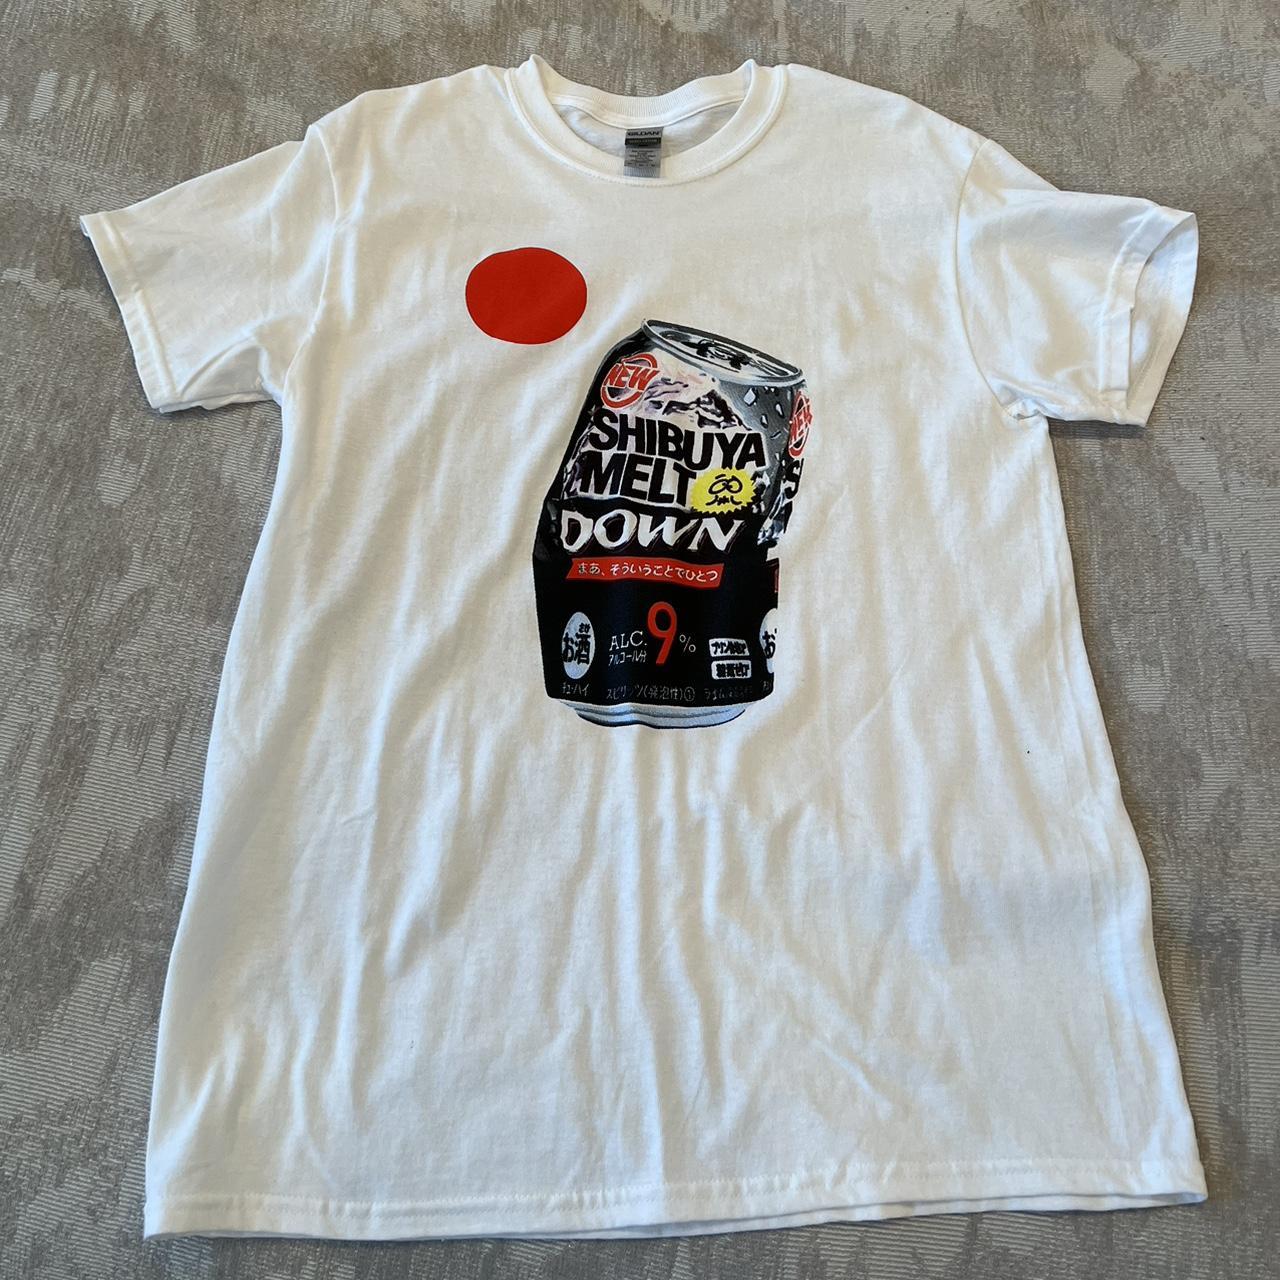 Shibuya Meltdown white t-shirt size medium